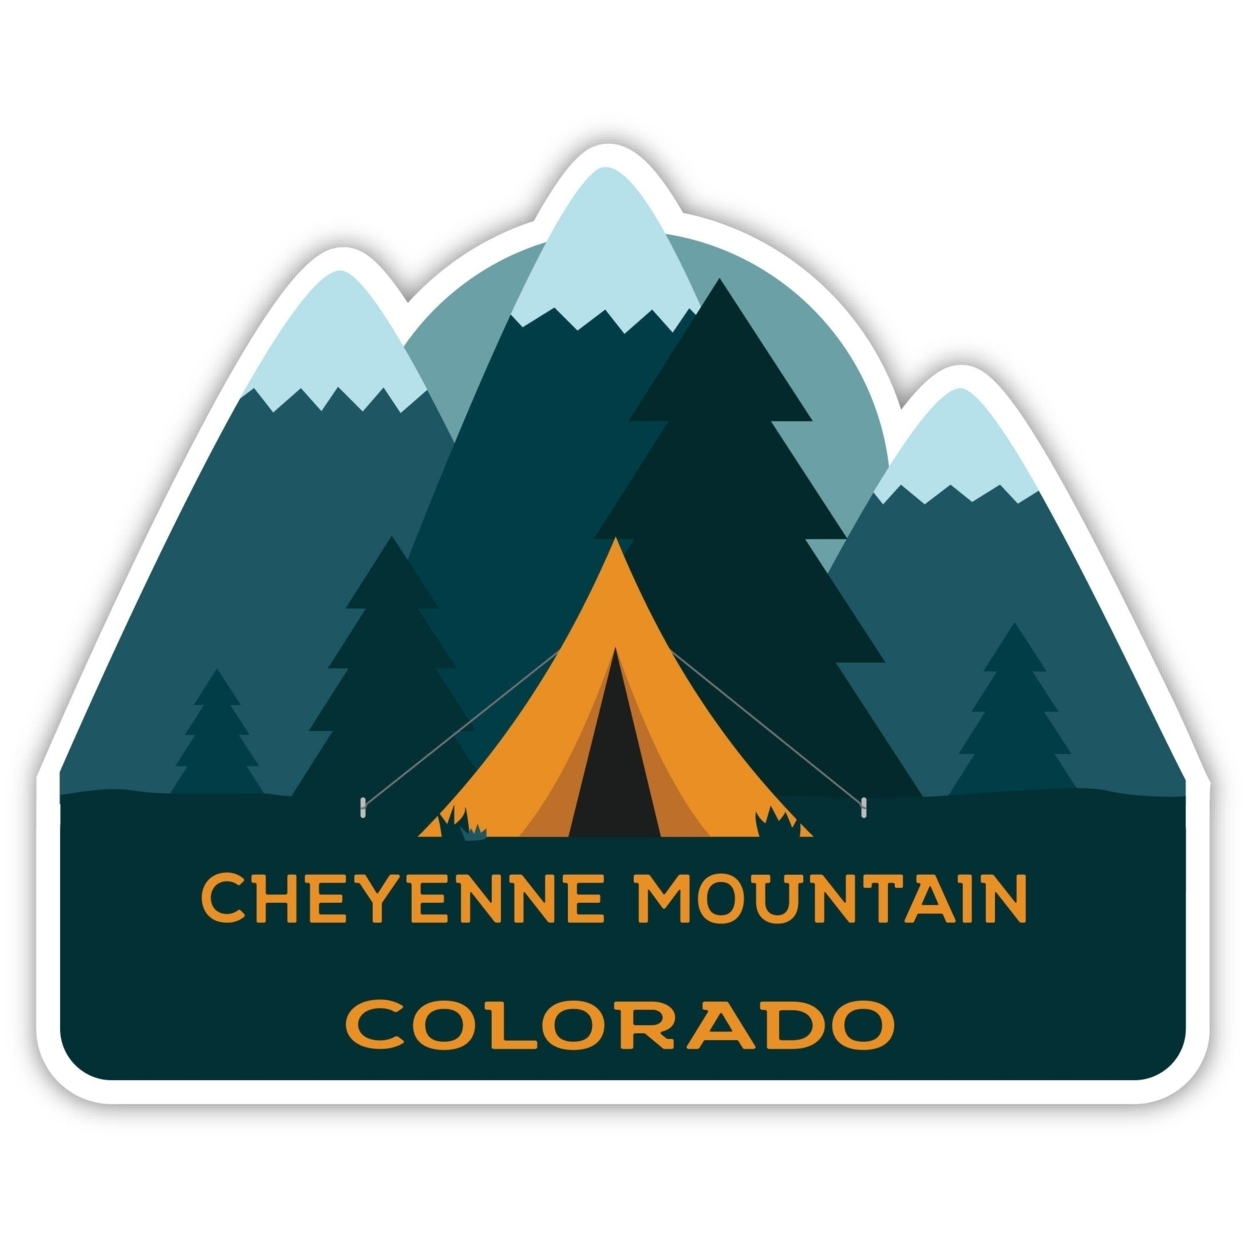 Cheyenne Mountain Colorado Souvenir Decorative Stickers (Choose Theme And Size) - Single Unit, 2-Inch, Tent